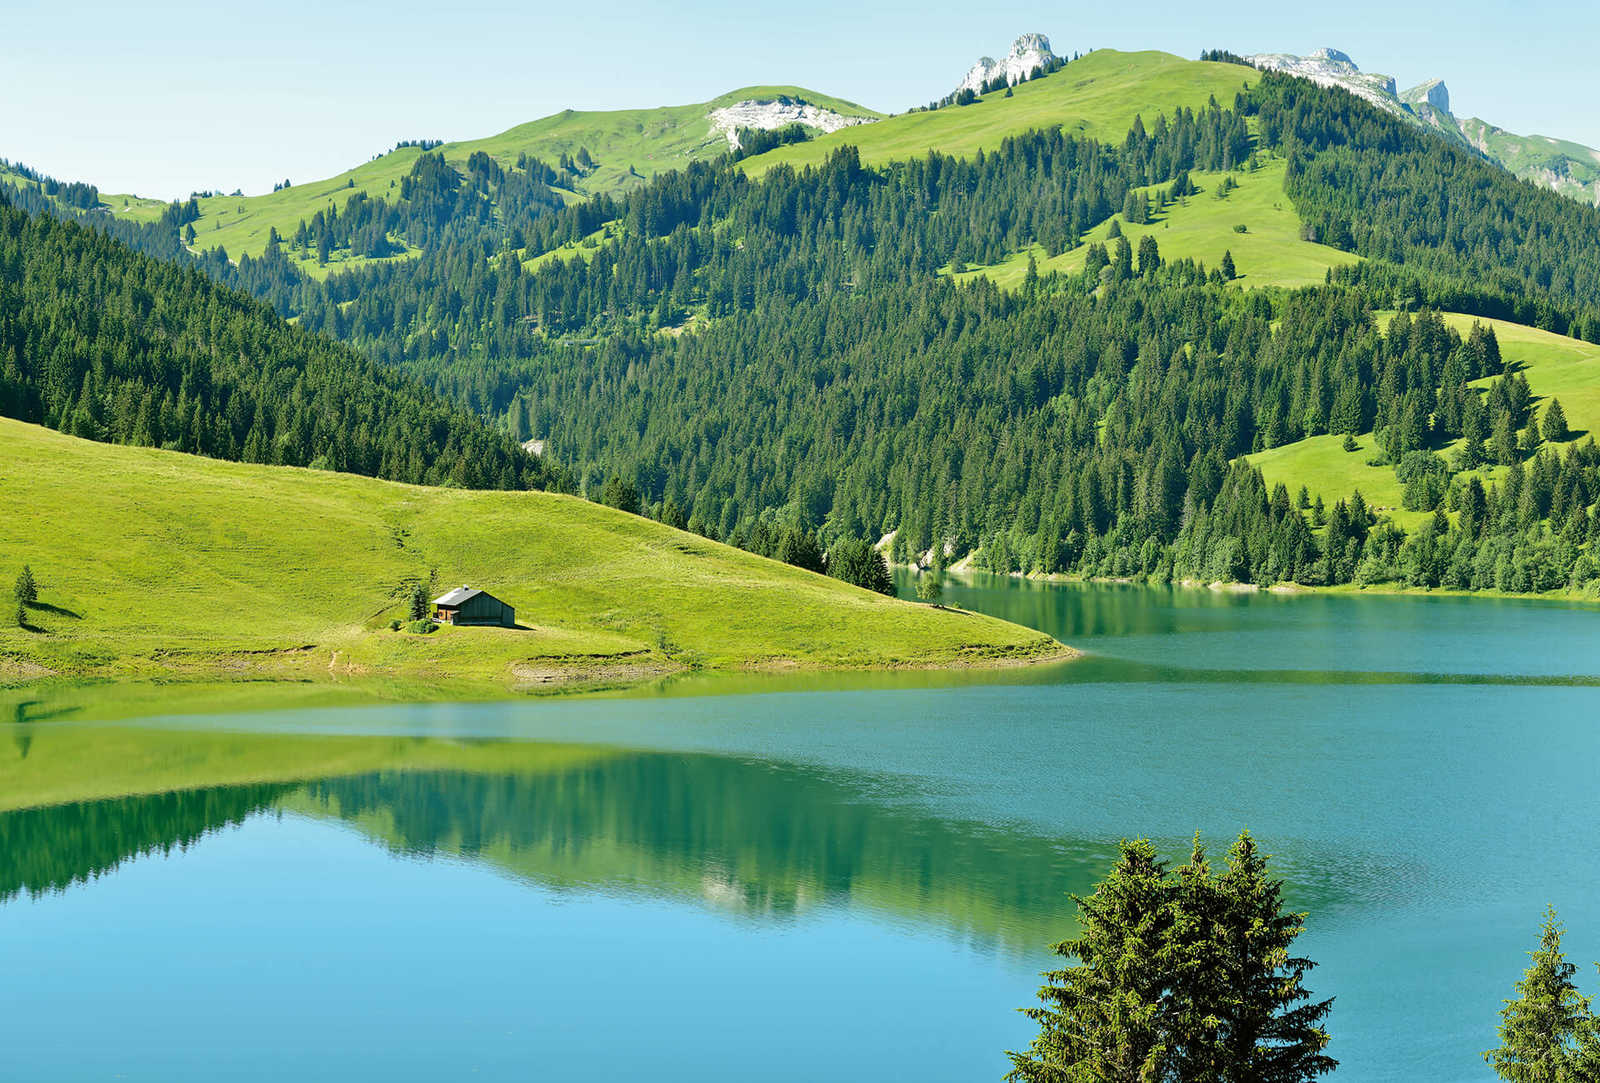 Fototapete Berg mit See in Schweiz – Grün, Blau, Grau
